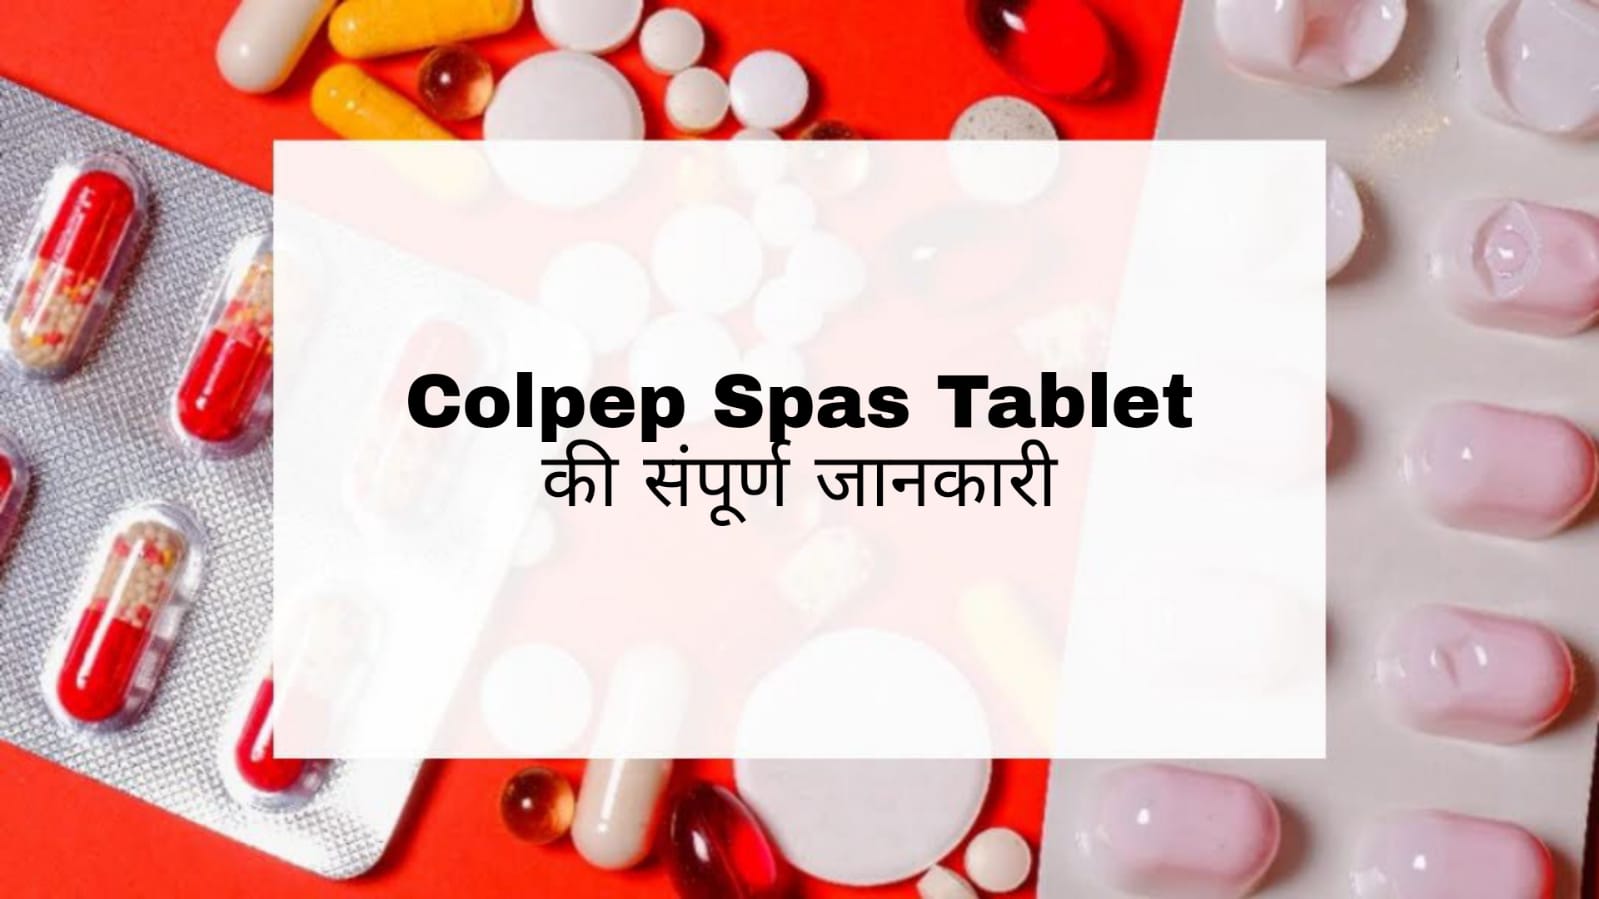 Colpep Spas Tablet Uses in Hindi: पेट दर्द, मरोड़, ऐंठन